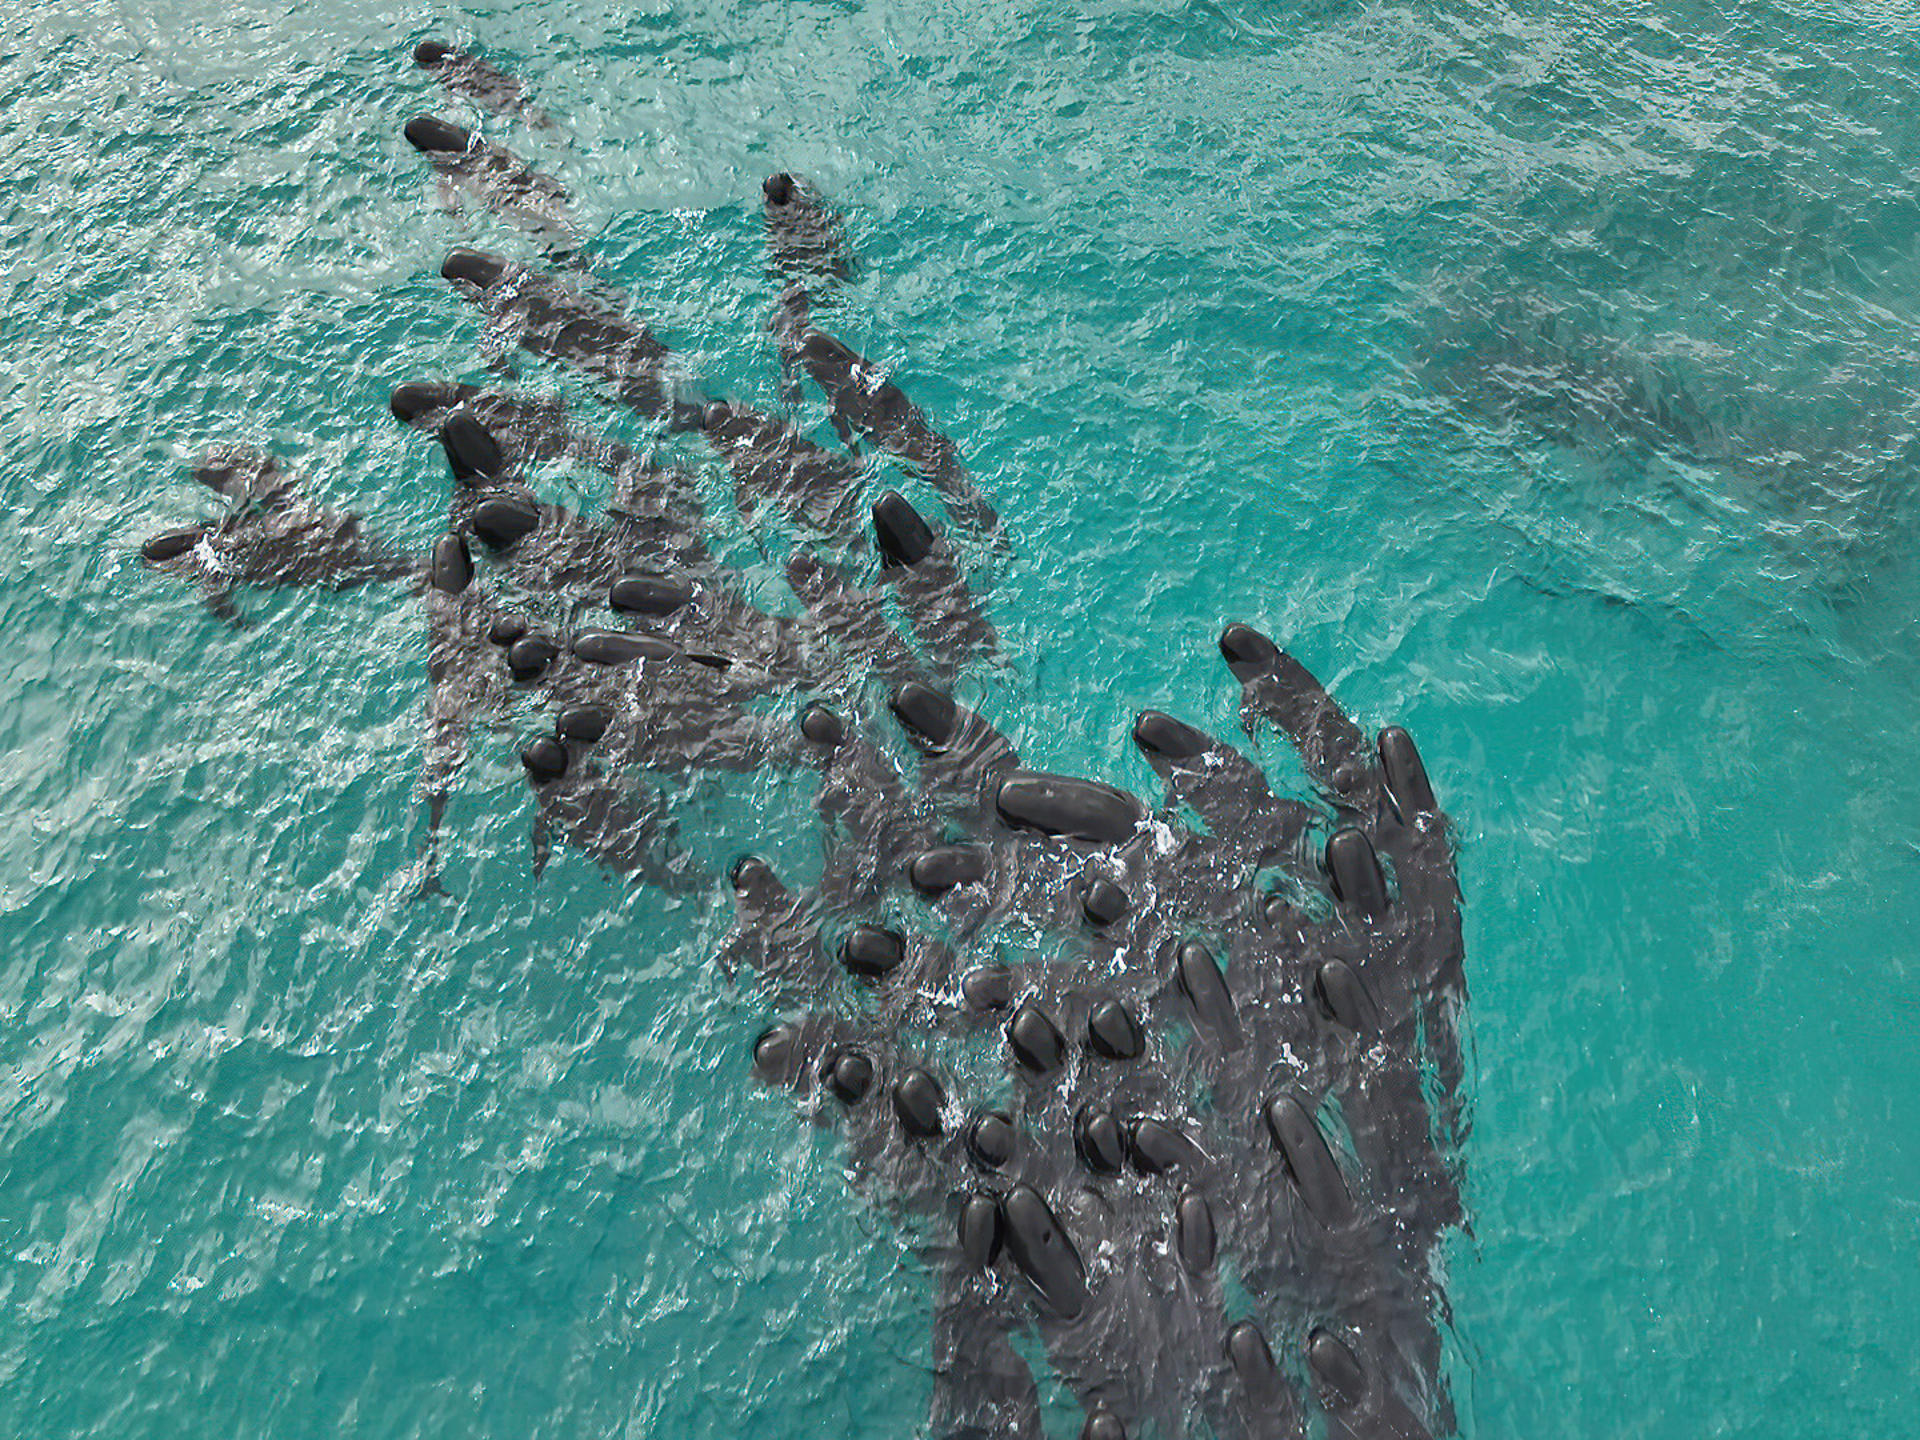 51 pilot whales die after stranding in West Australia EFE Noticias